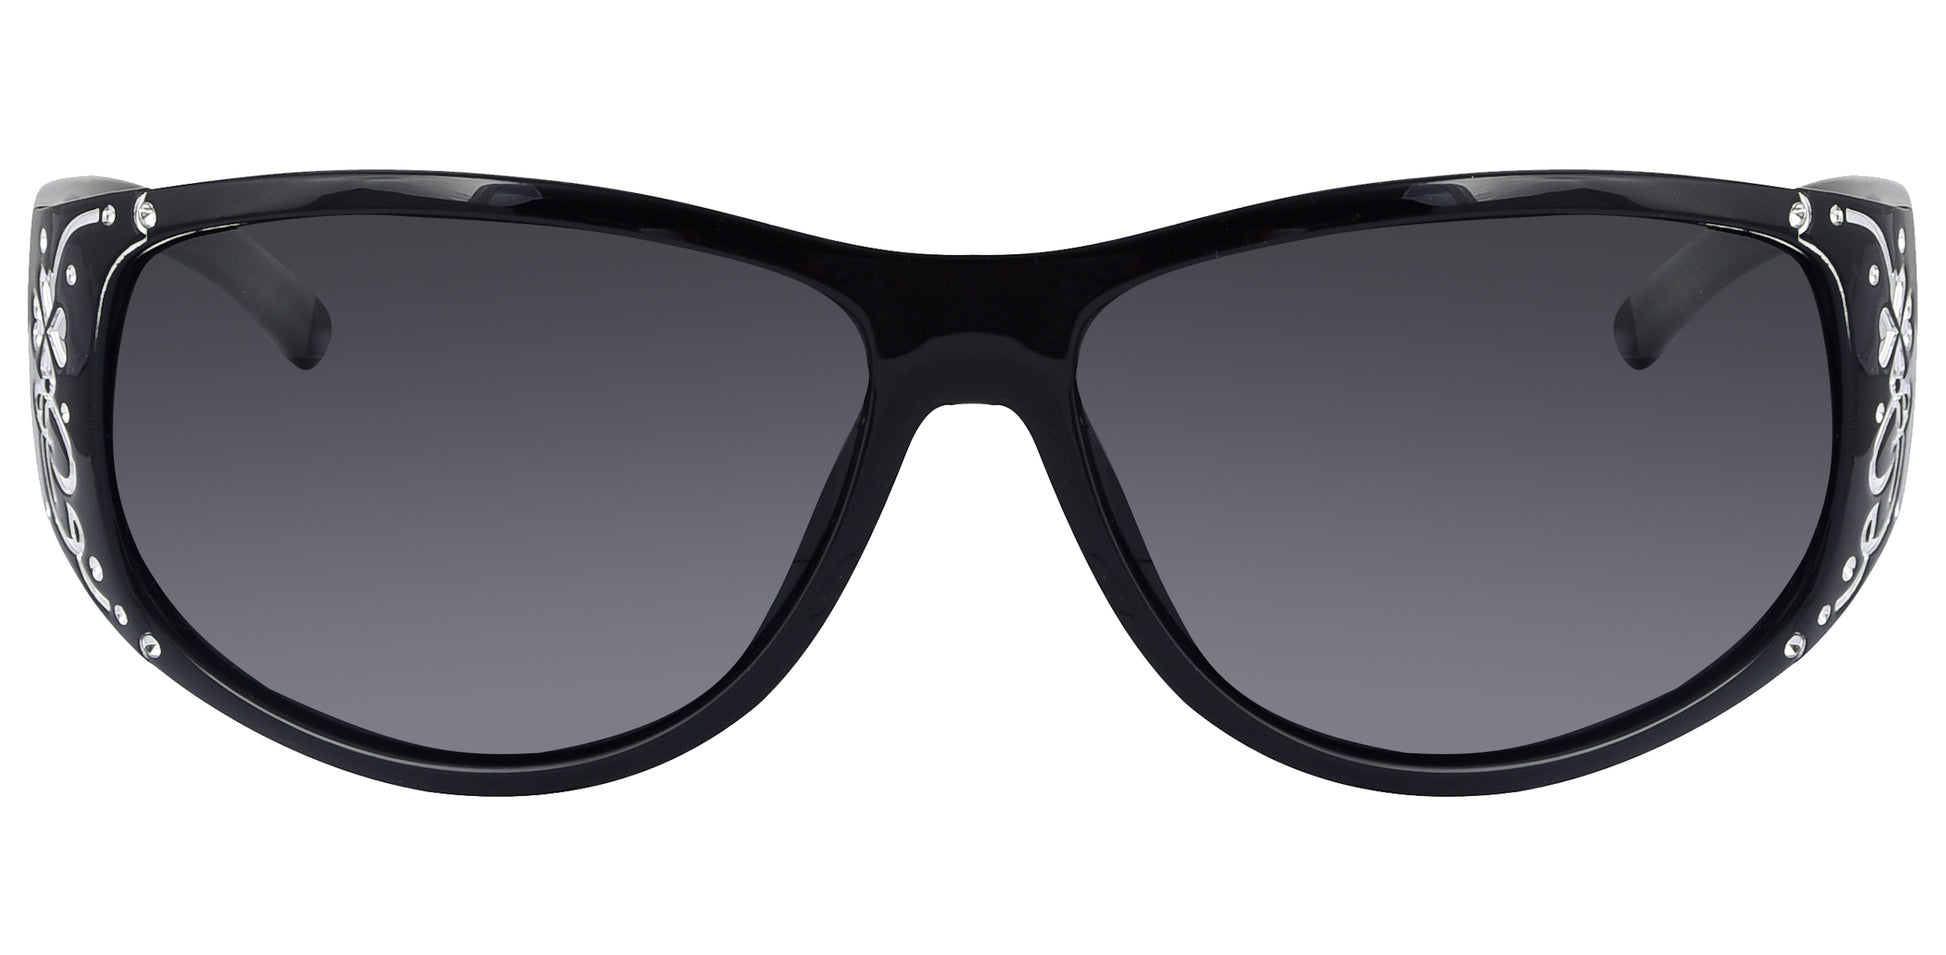 Third image: Polarized Sunglasses for Women - Premium Fashion Sunglasses - HZ Series Chic Womens Designer Sunglasses